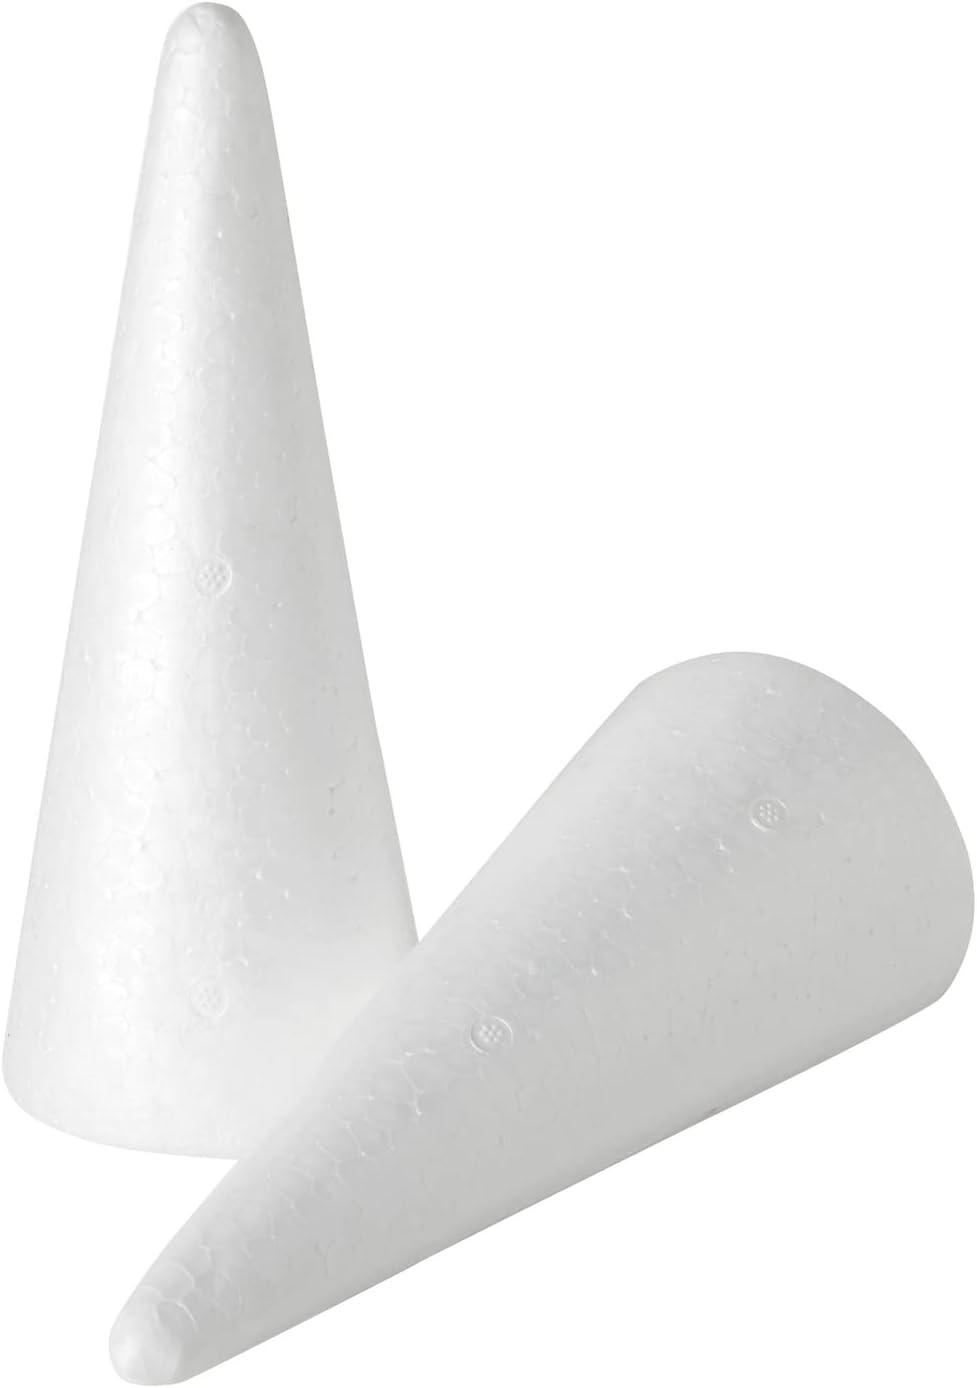 5 Pieces Cone Shaped Modelling Foam Polystyrene Styrofoam Foam Crafts Xmas  Party